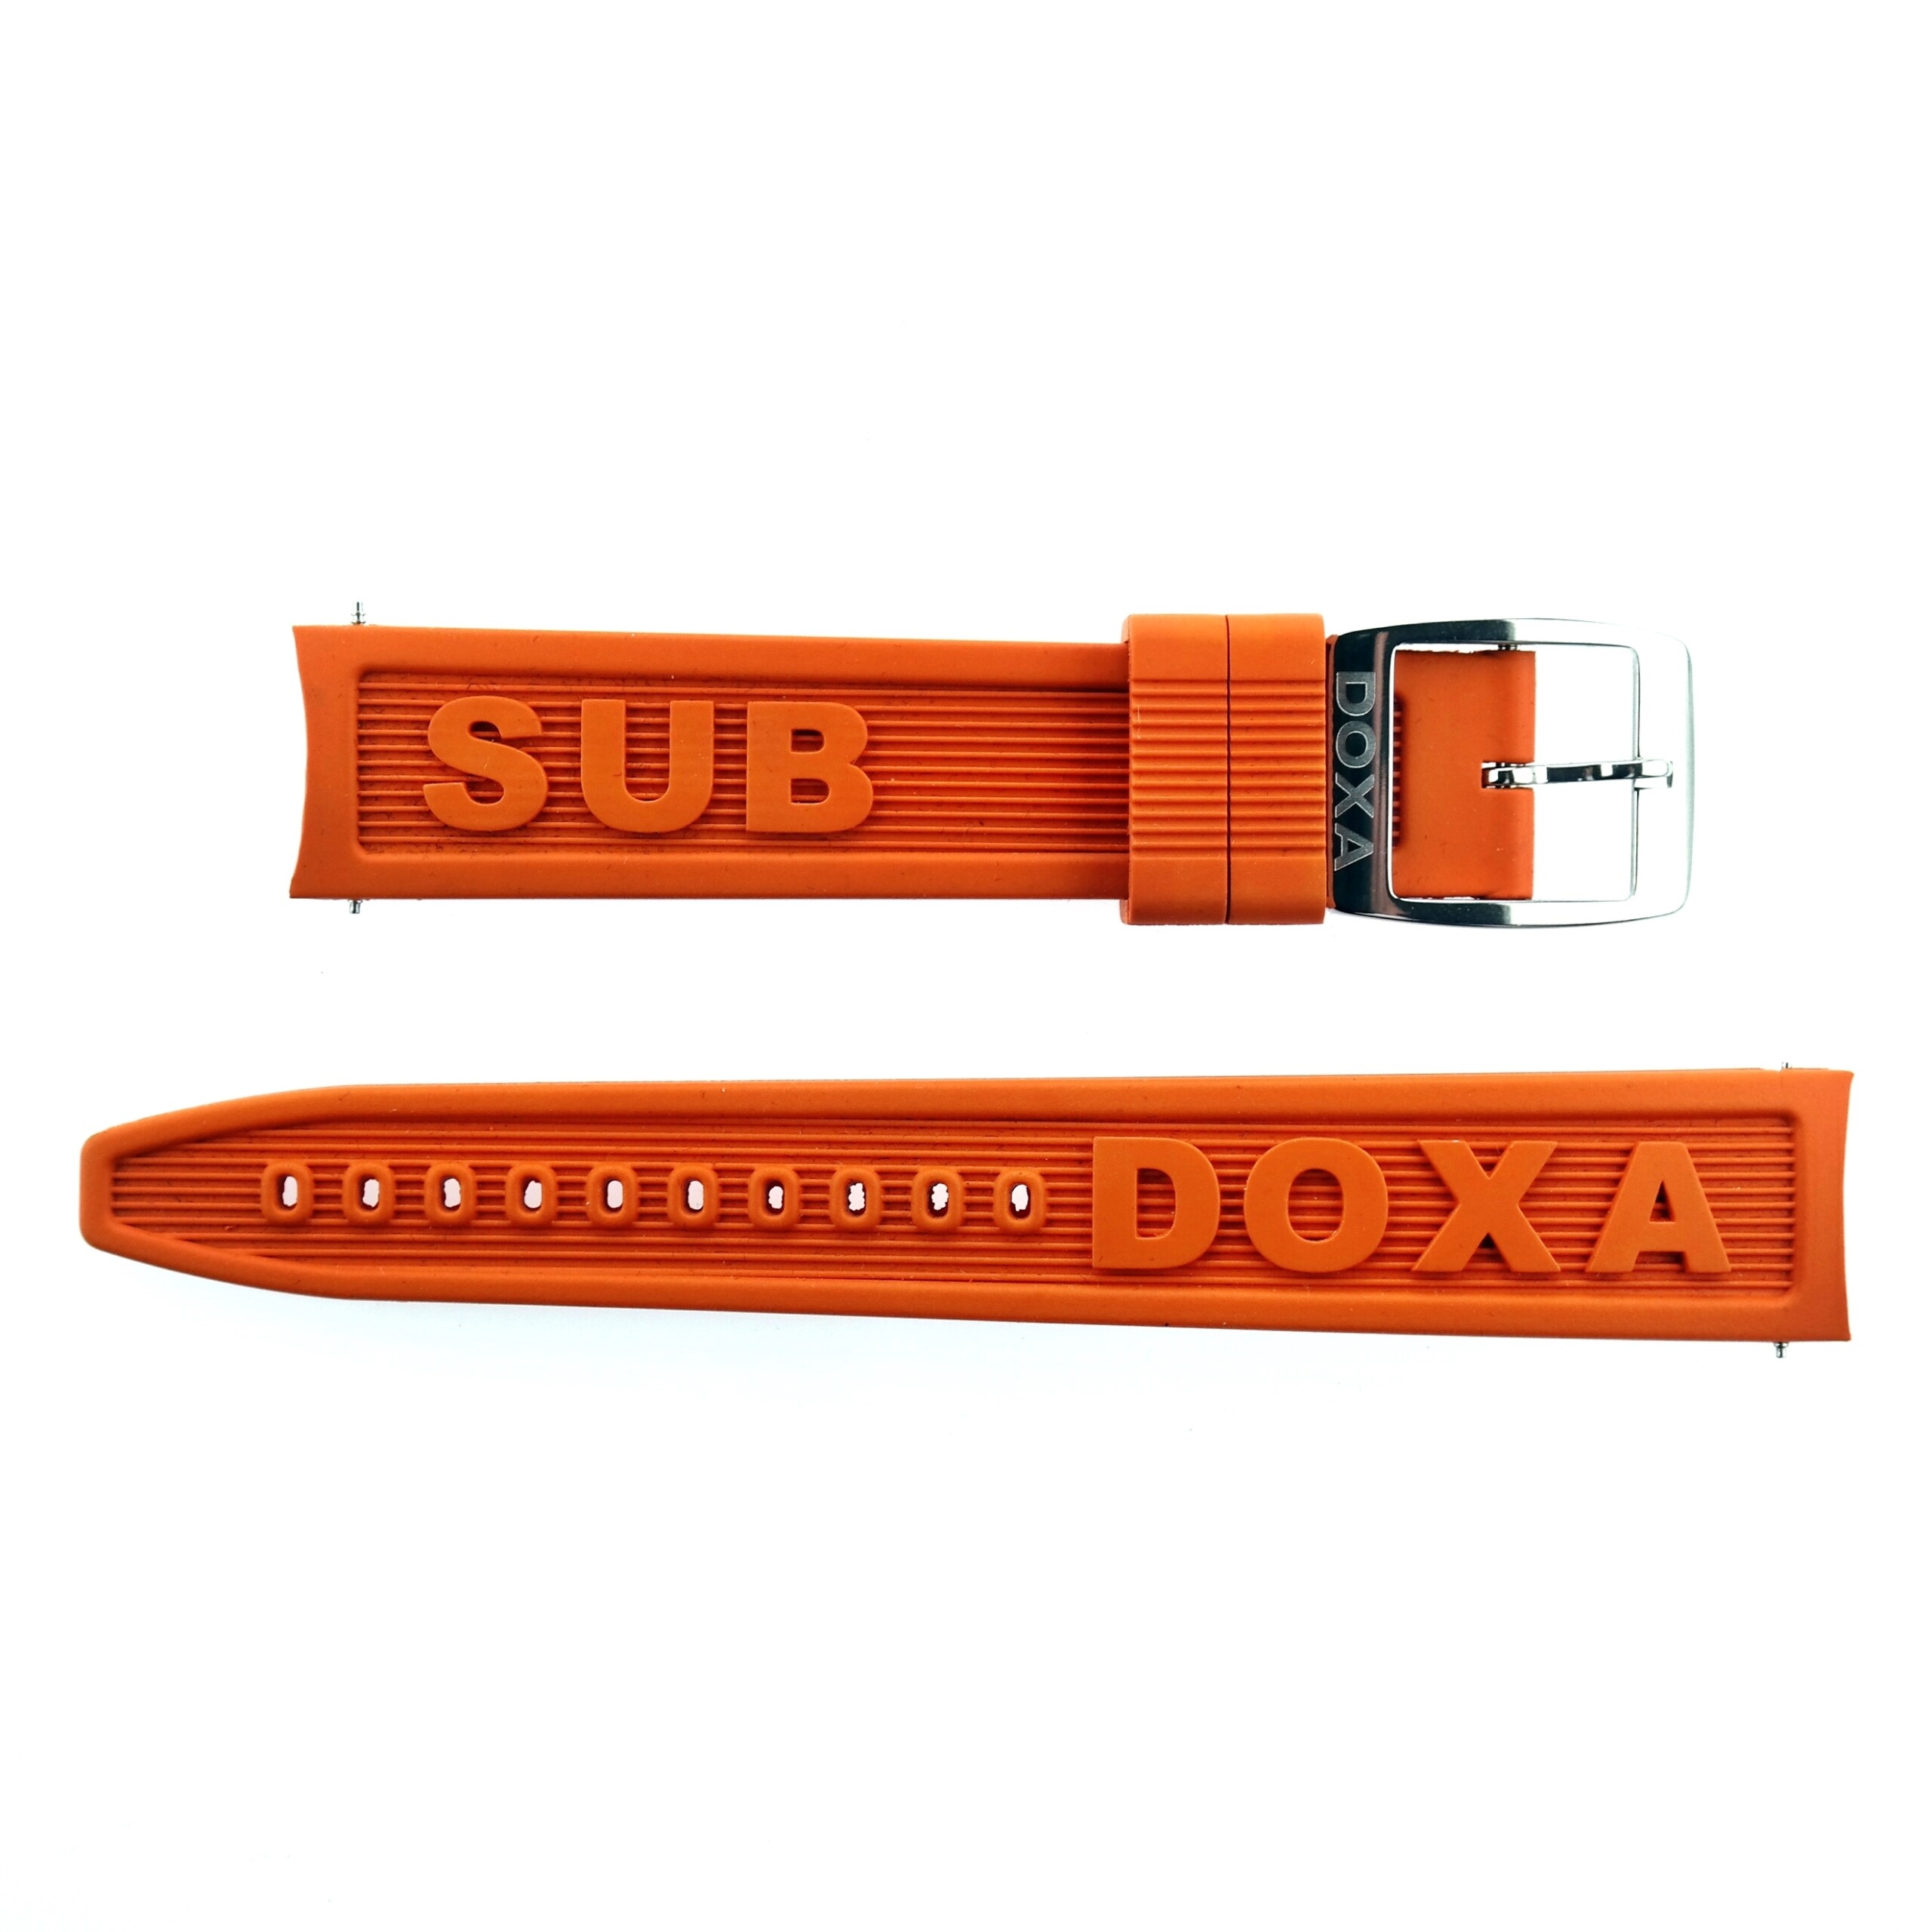 DOXA - SUB - Rubber Watch Strap with Buckle - 20/18 90/130 - Orange